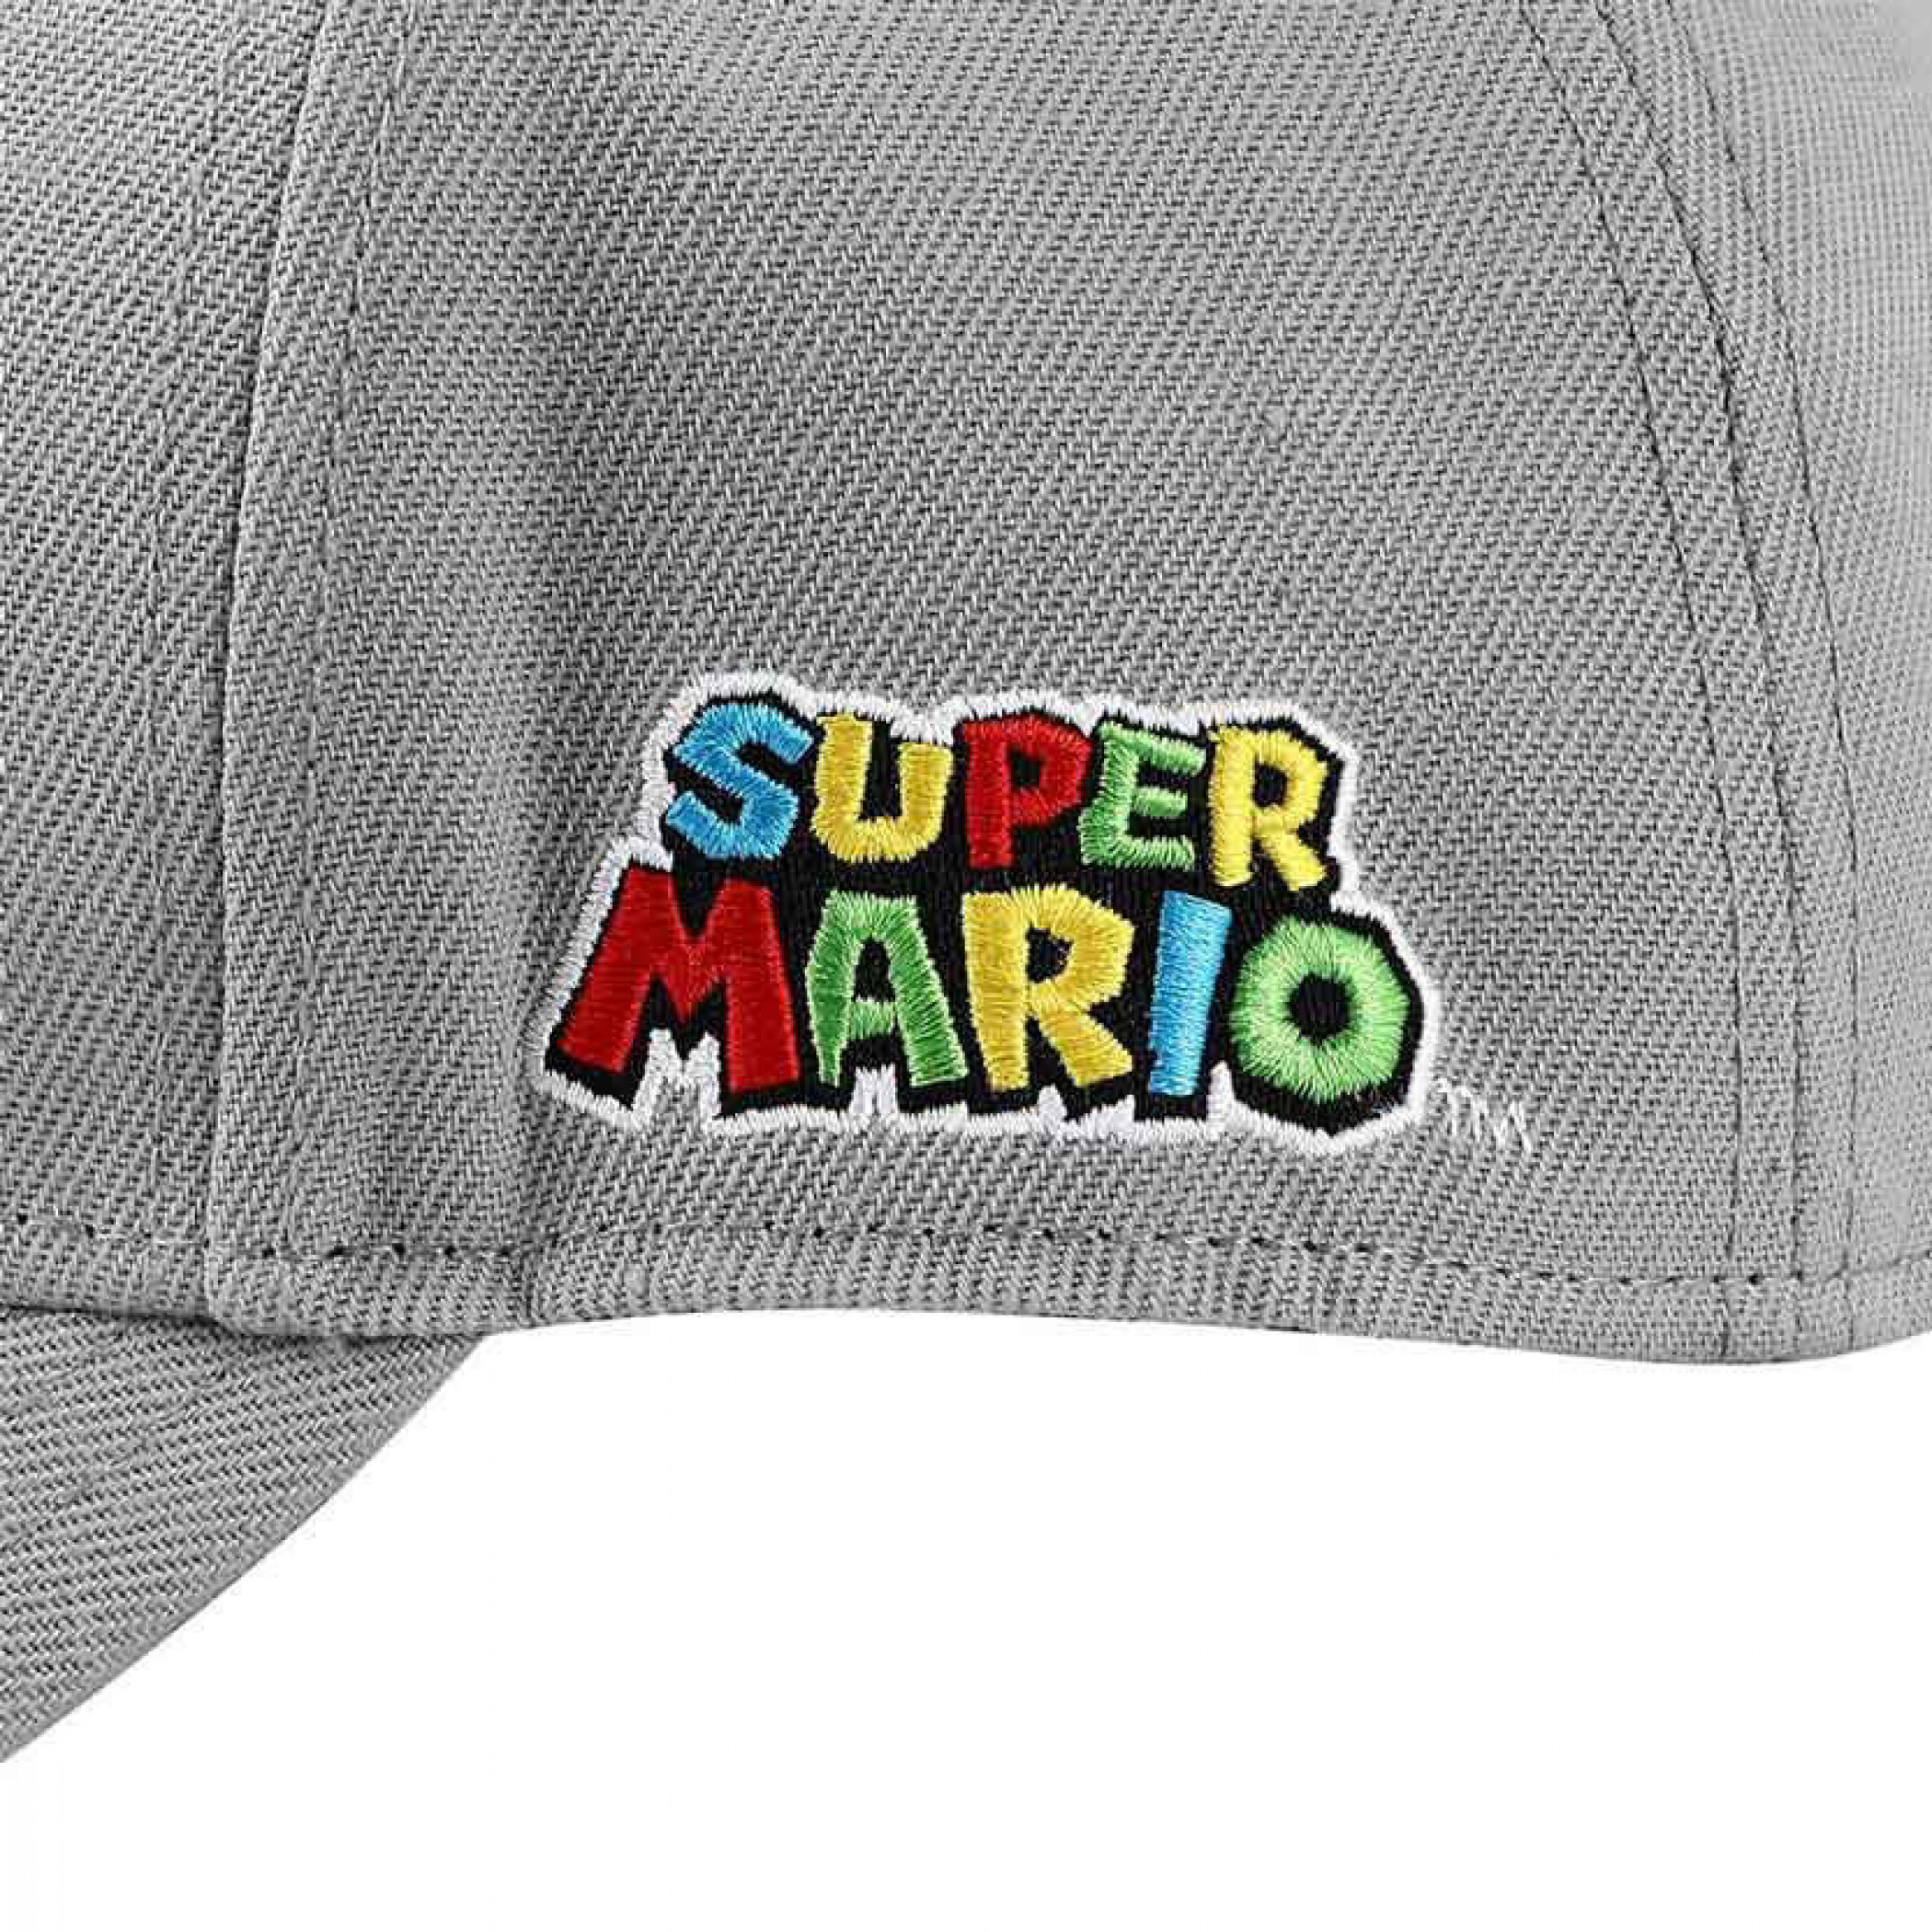 Nintendo Super Mario Mushroom Kingdom Patch Adjustable Hat